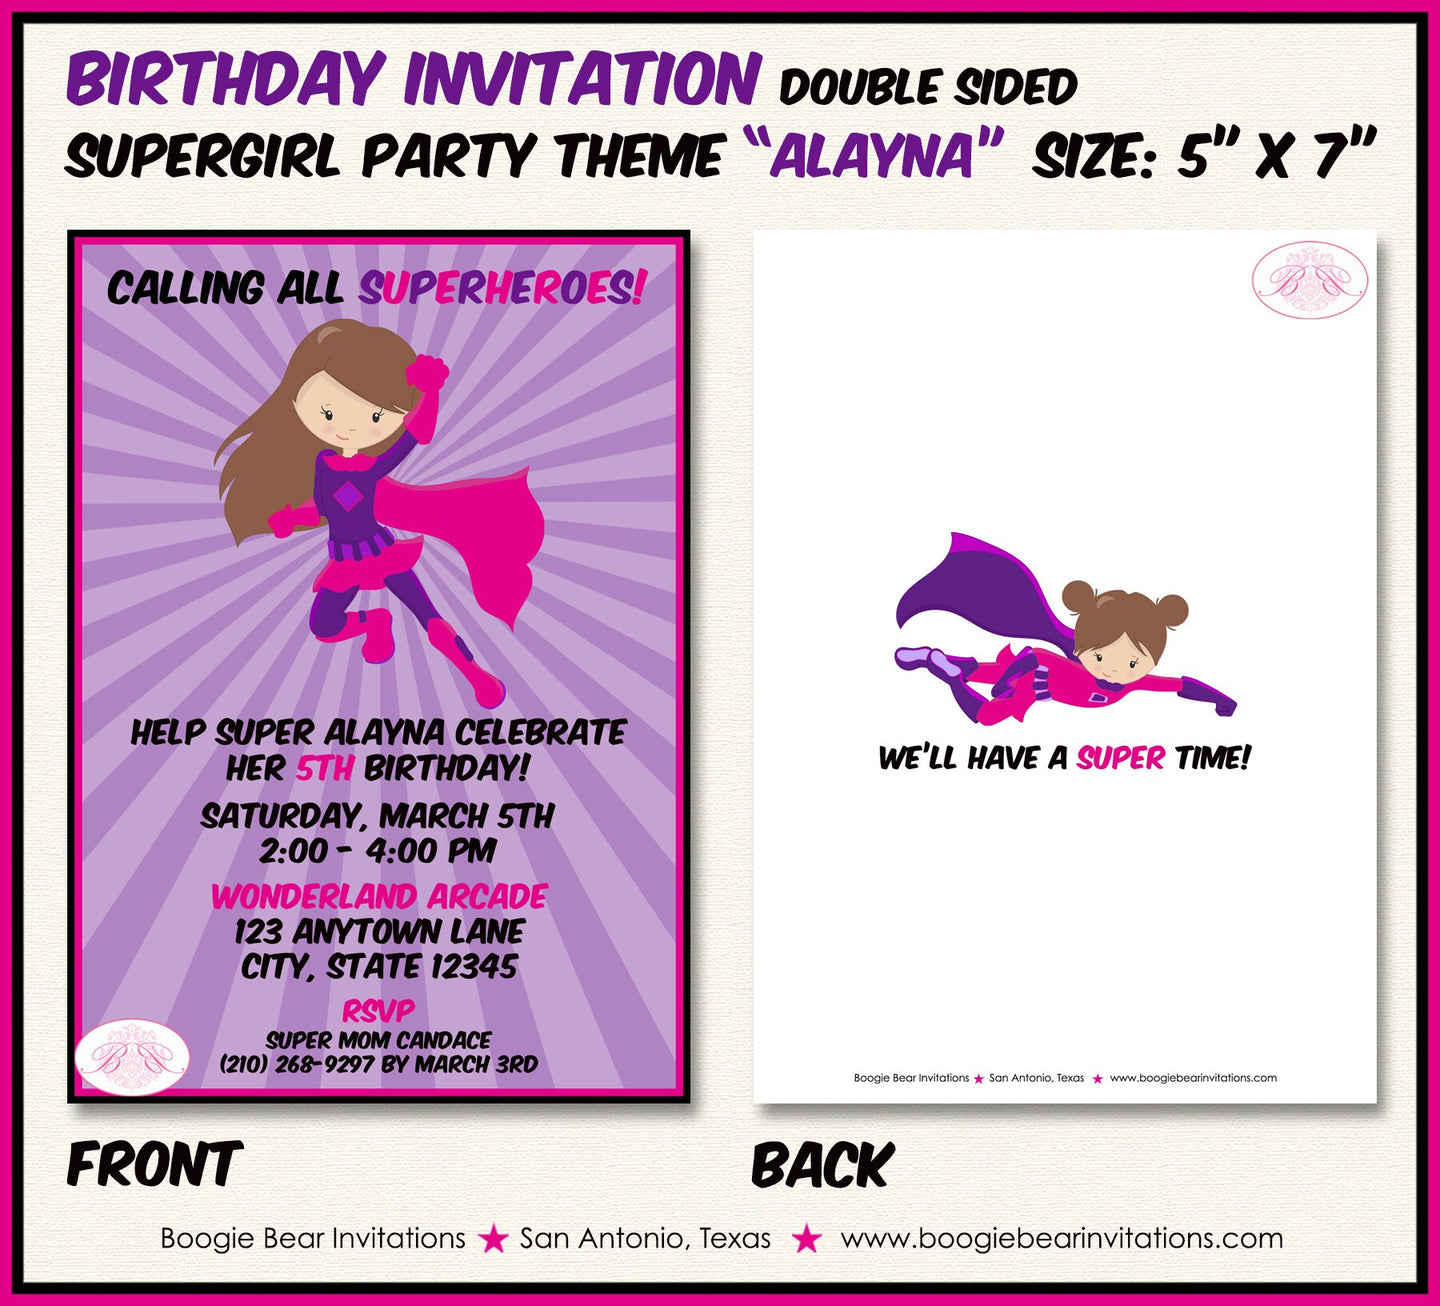 Superhero Girl Birthday Party Invitation Pink Supergirl Super Hero Girl Fly Boogie Bear Invitations Alayna Theme Paperless Printable Printed